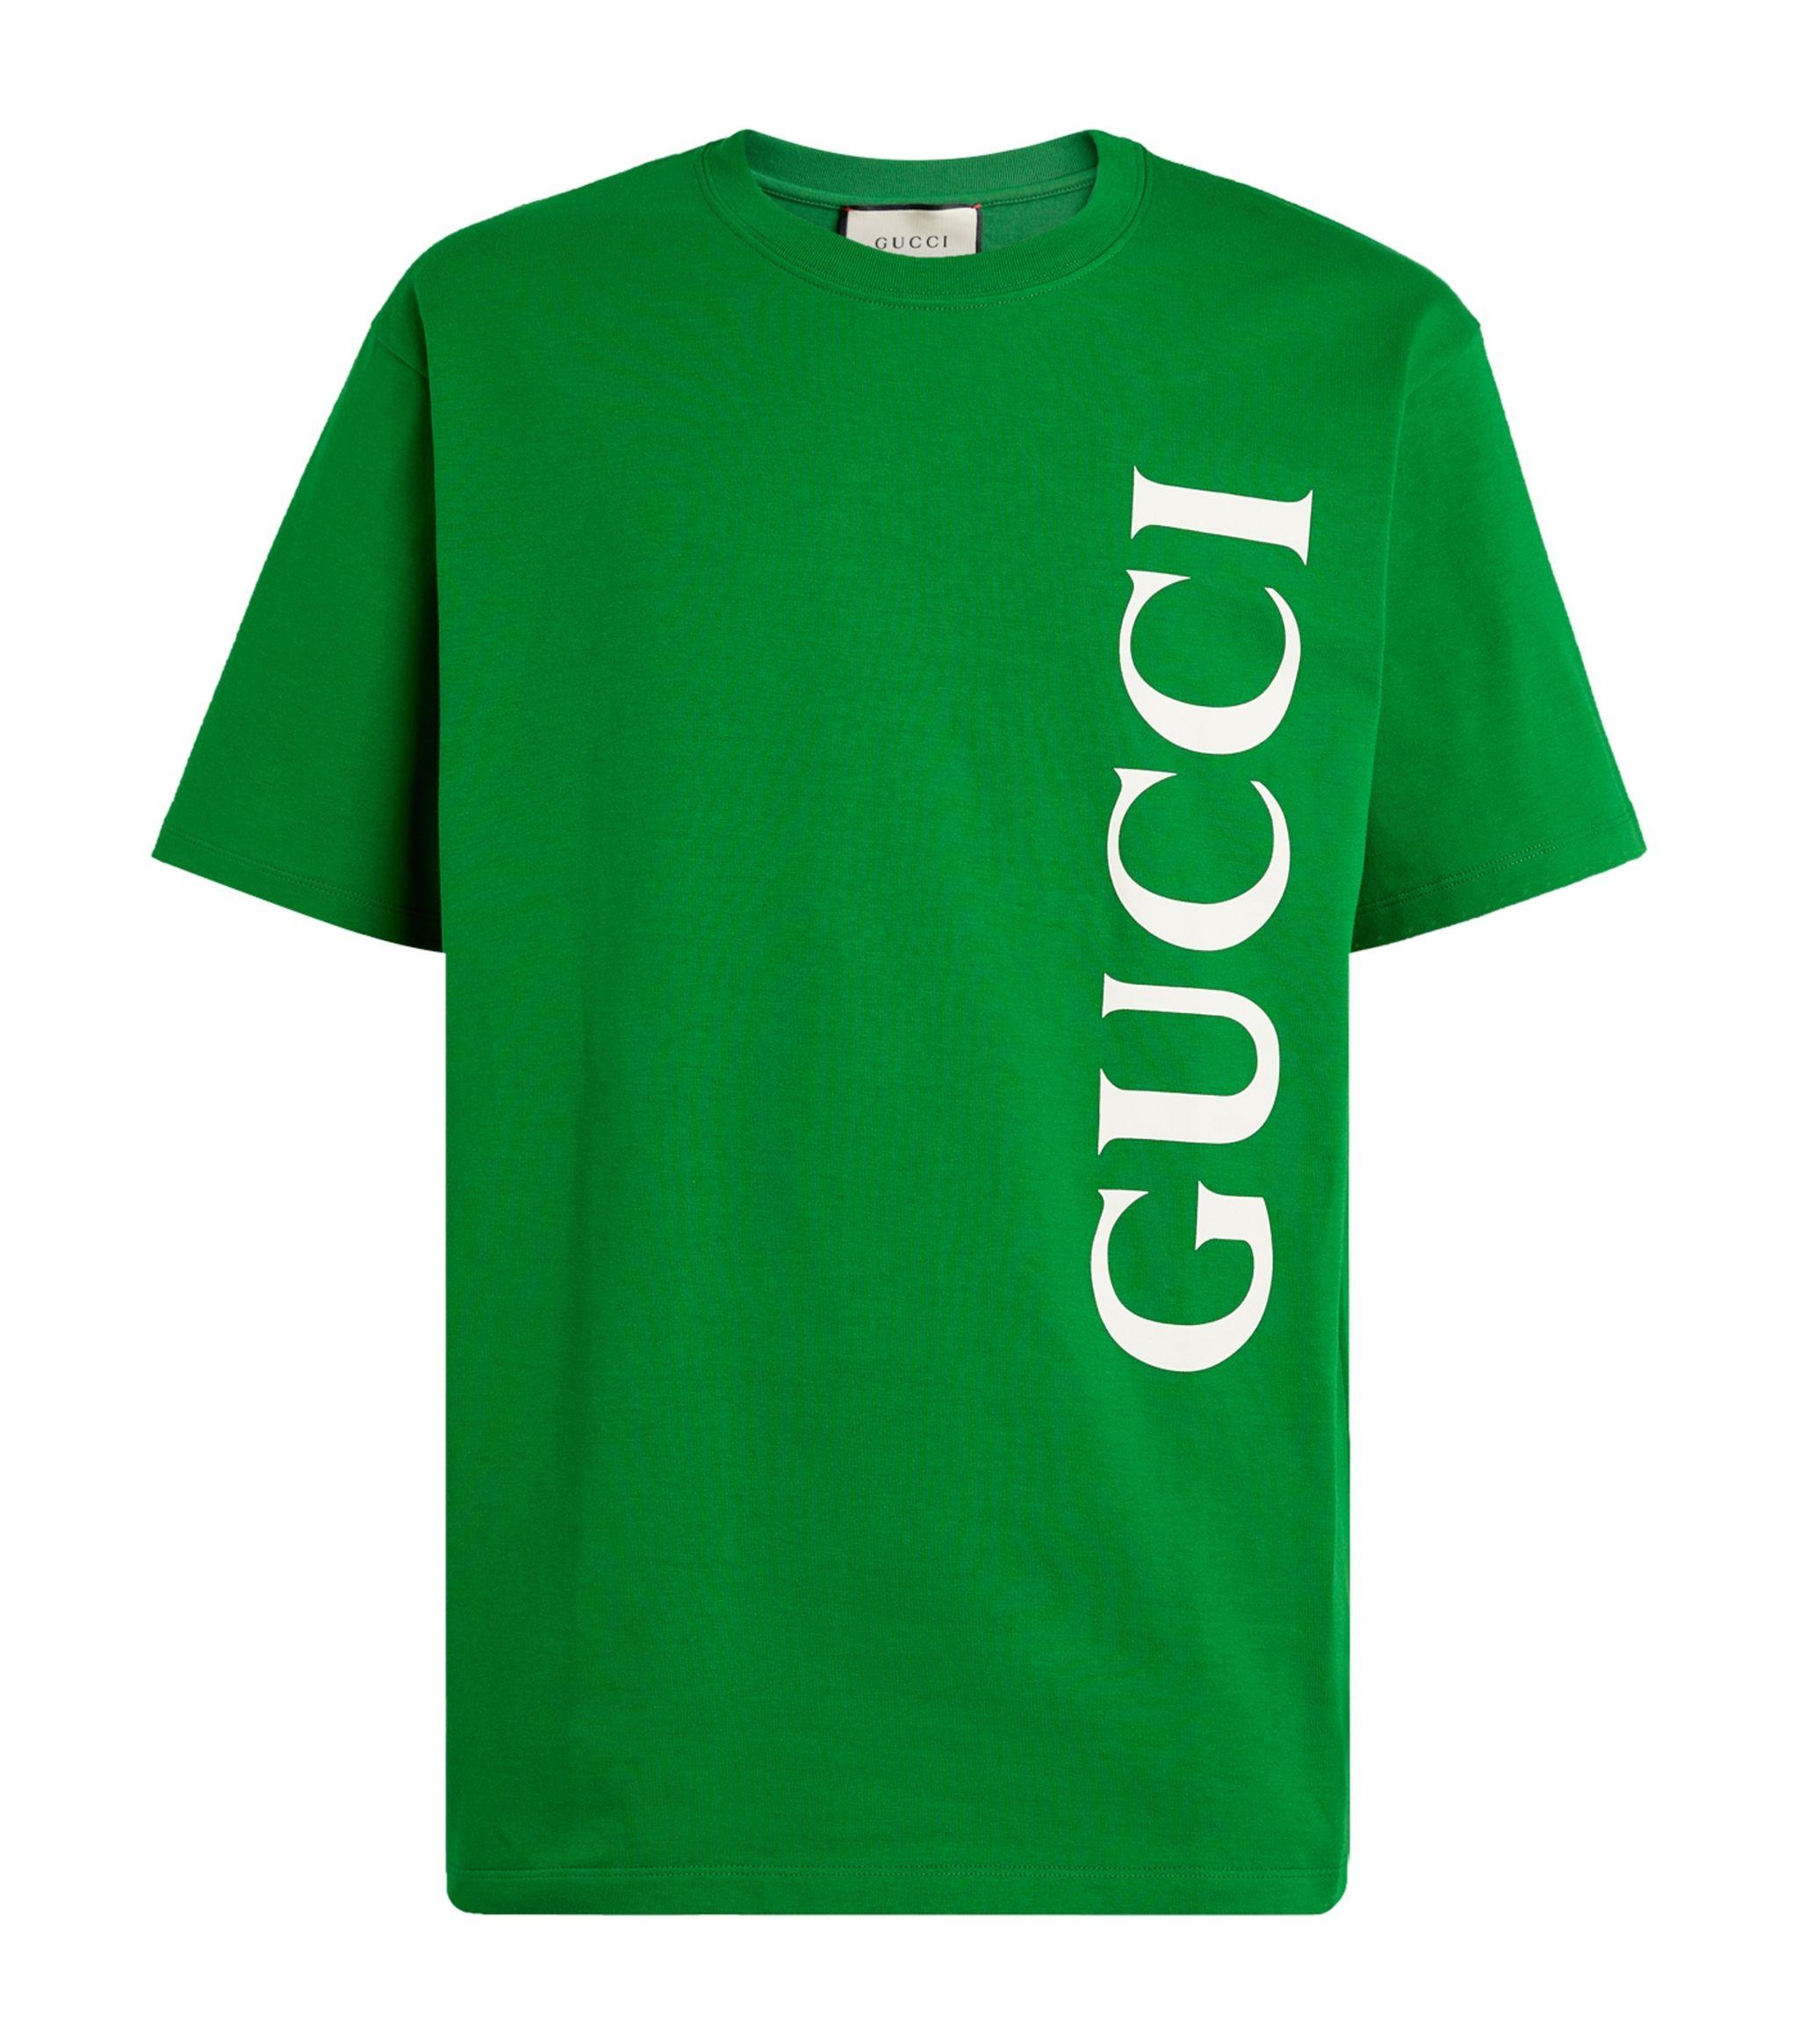 Gucci Cotton Vertical Logo T-shirt in Green for Men - Lyst